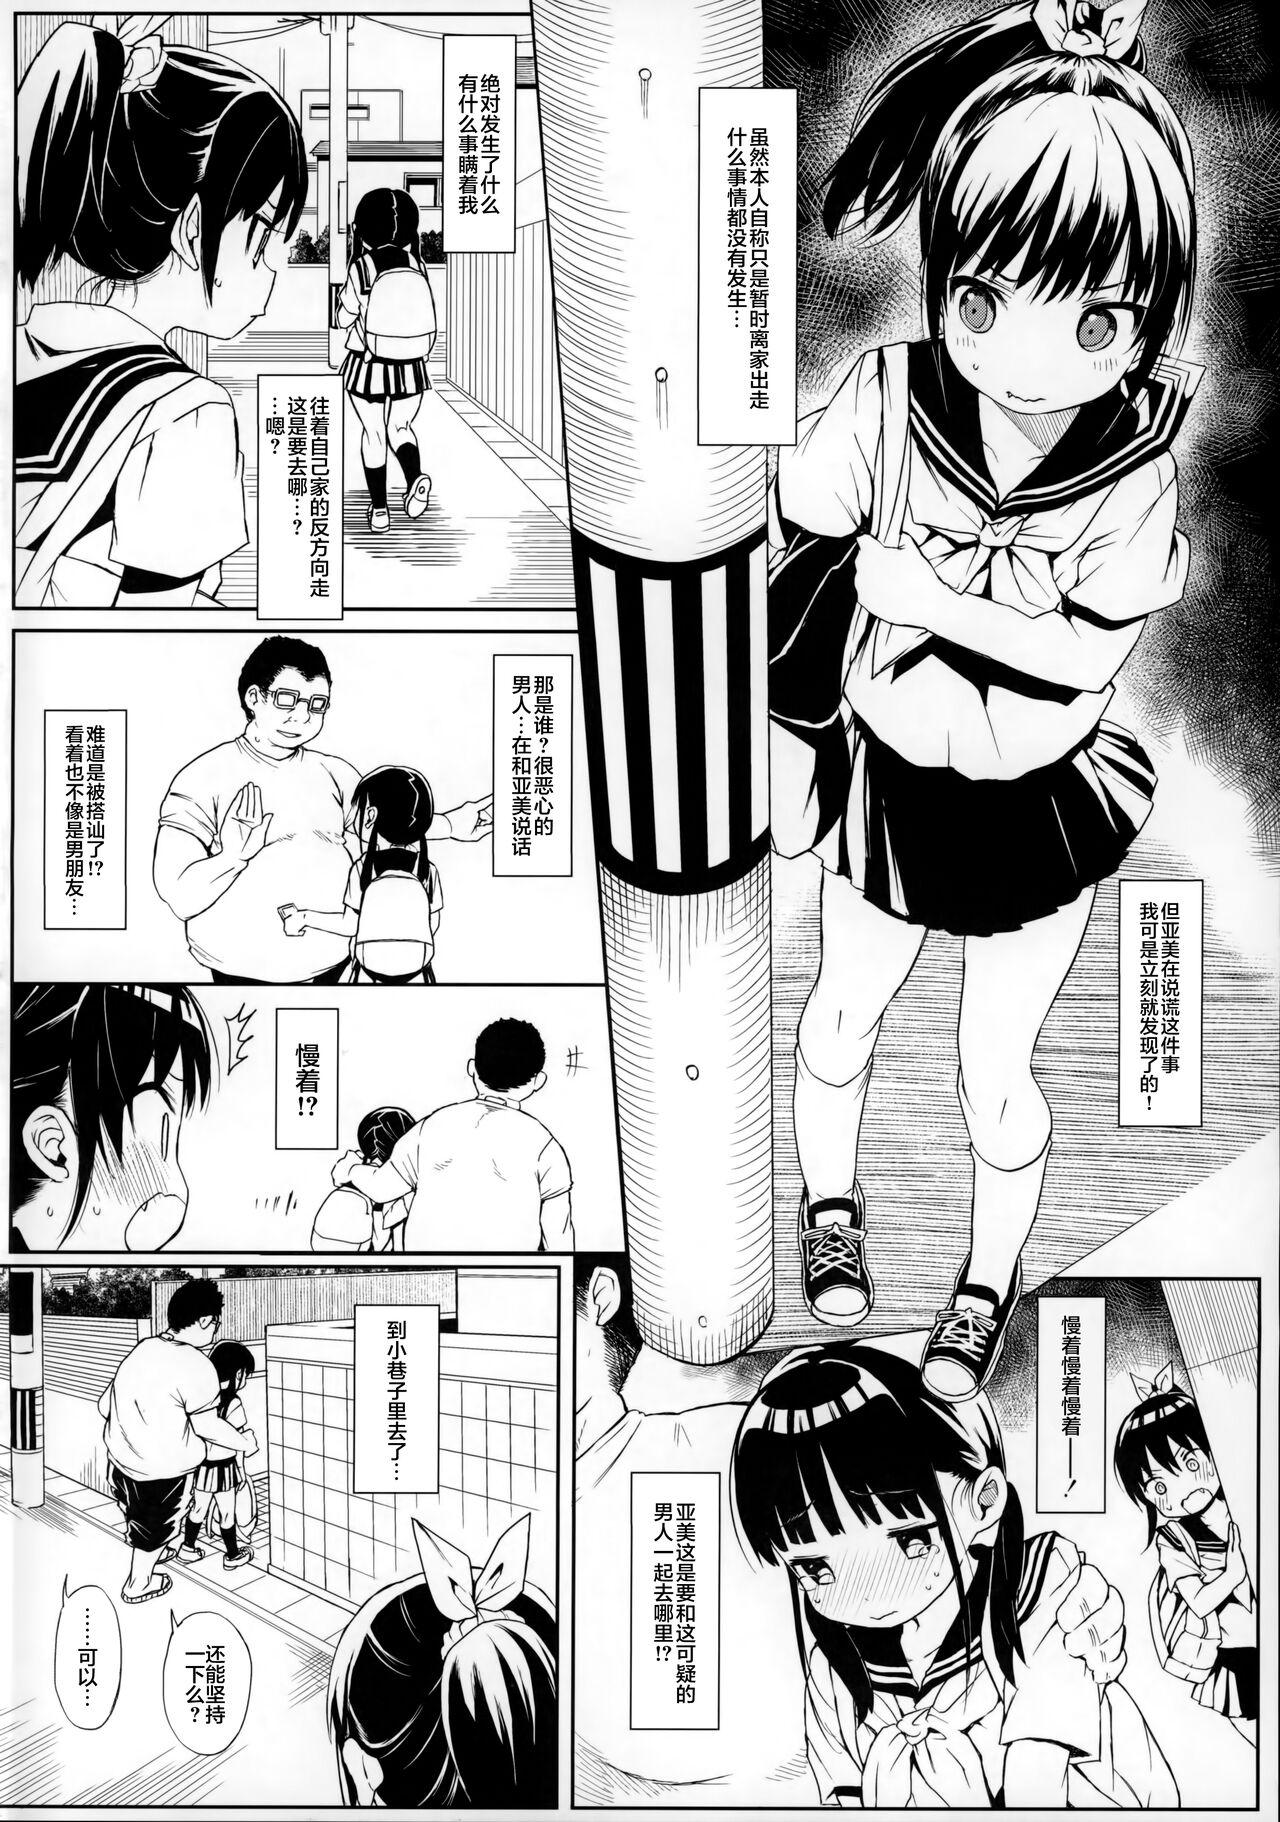 Tgirl コミケのおまけまとめ part1 - Eromanga sensei Uncensored - Page 5